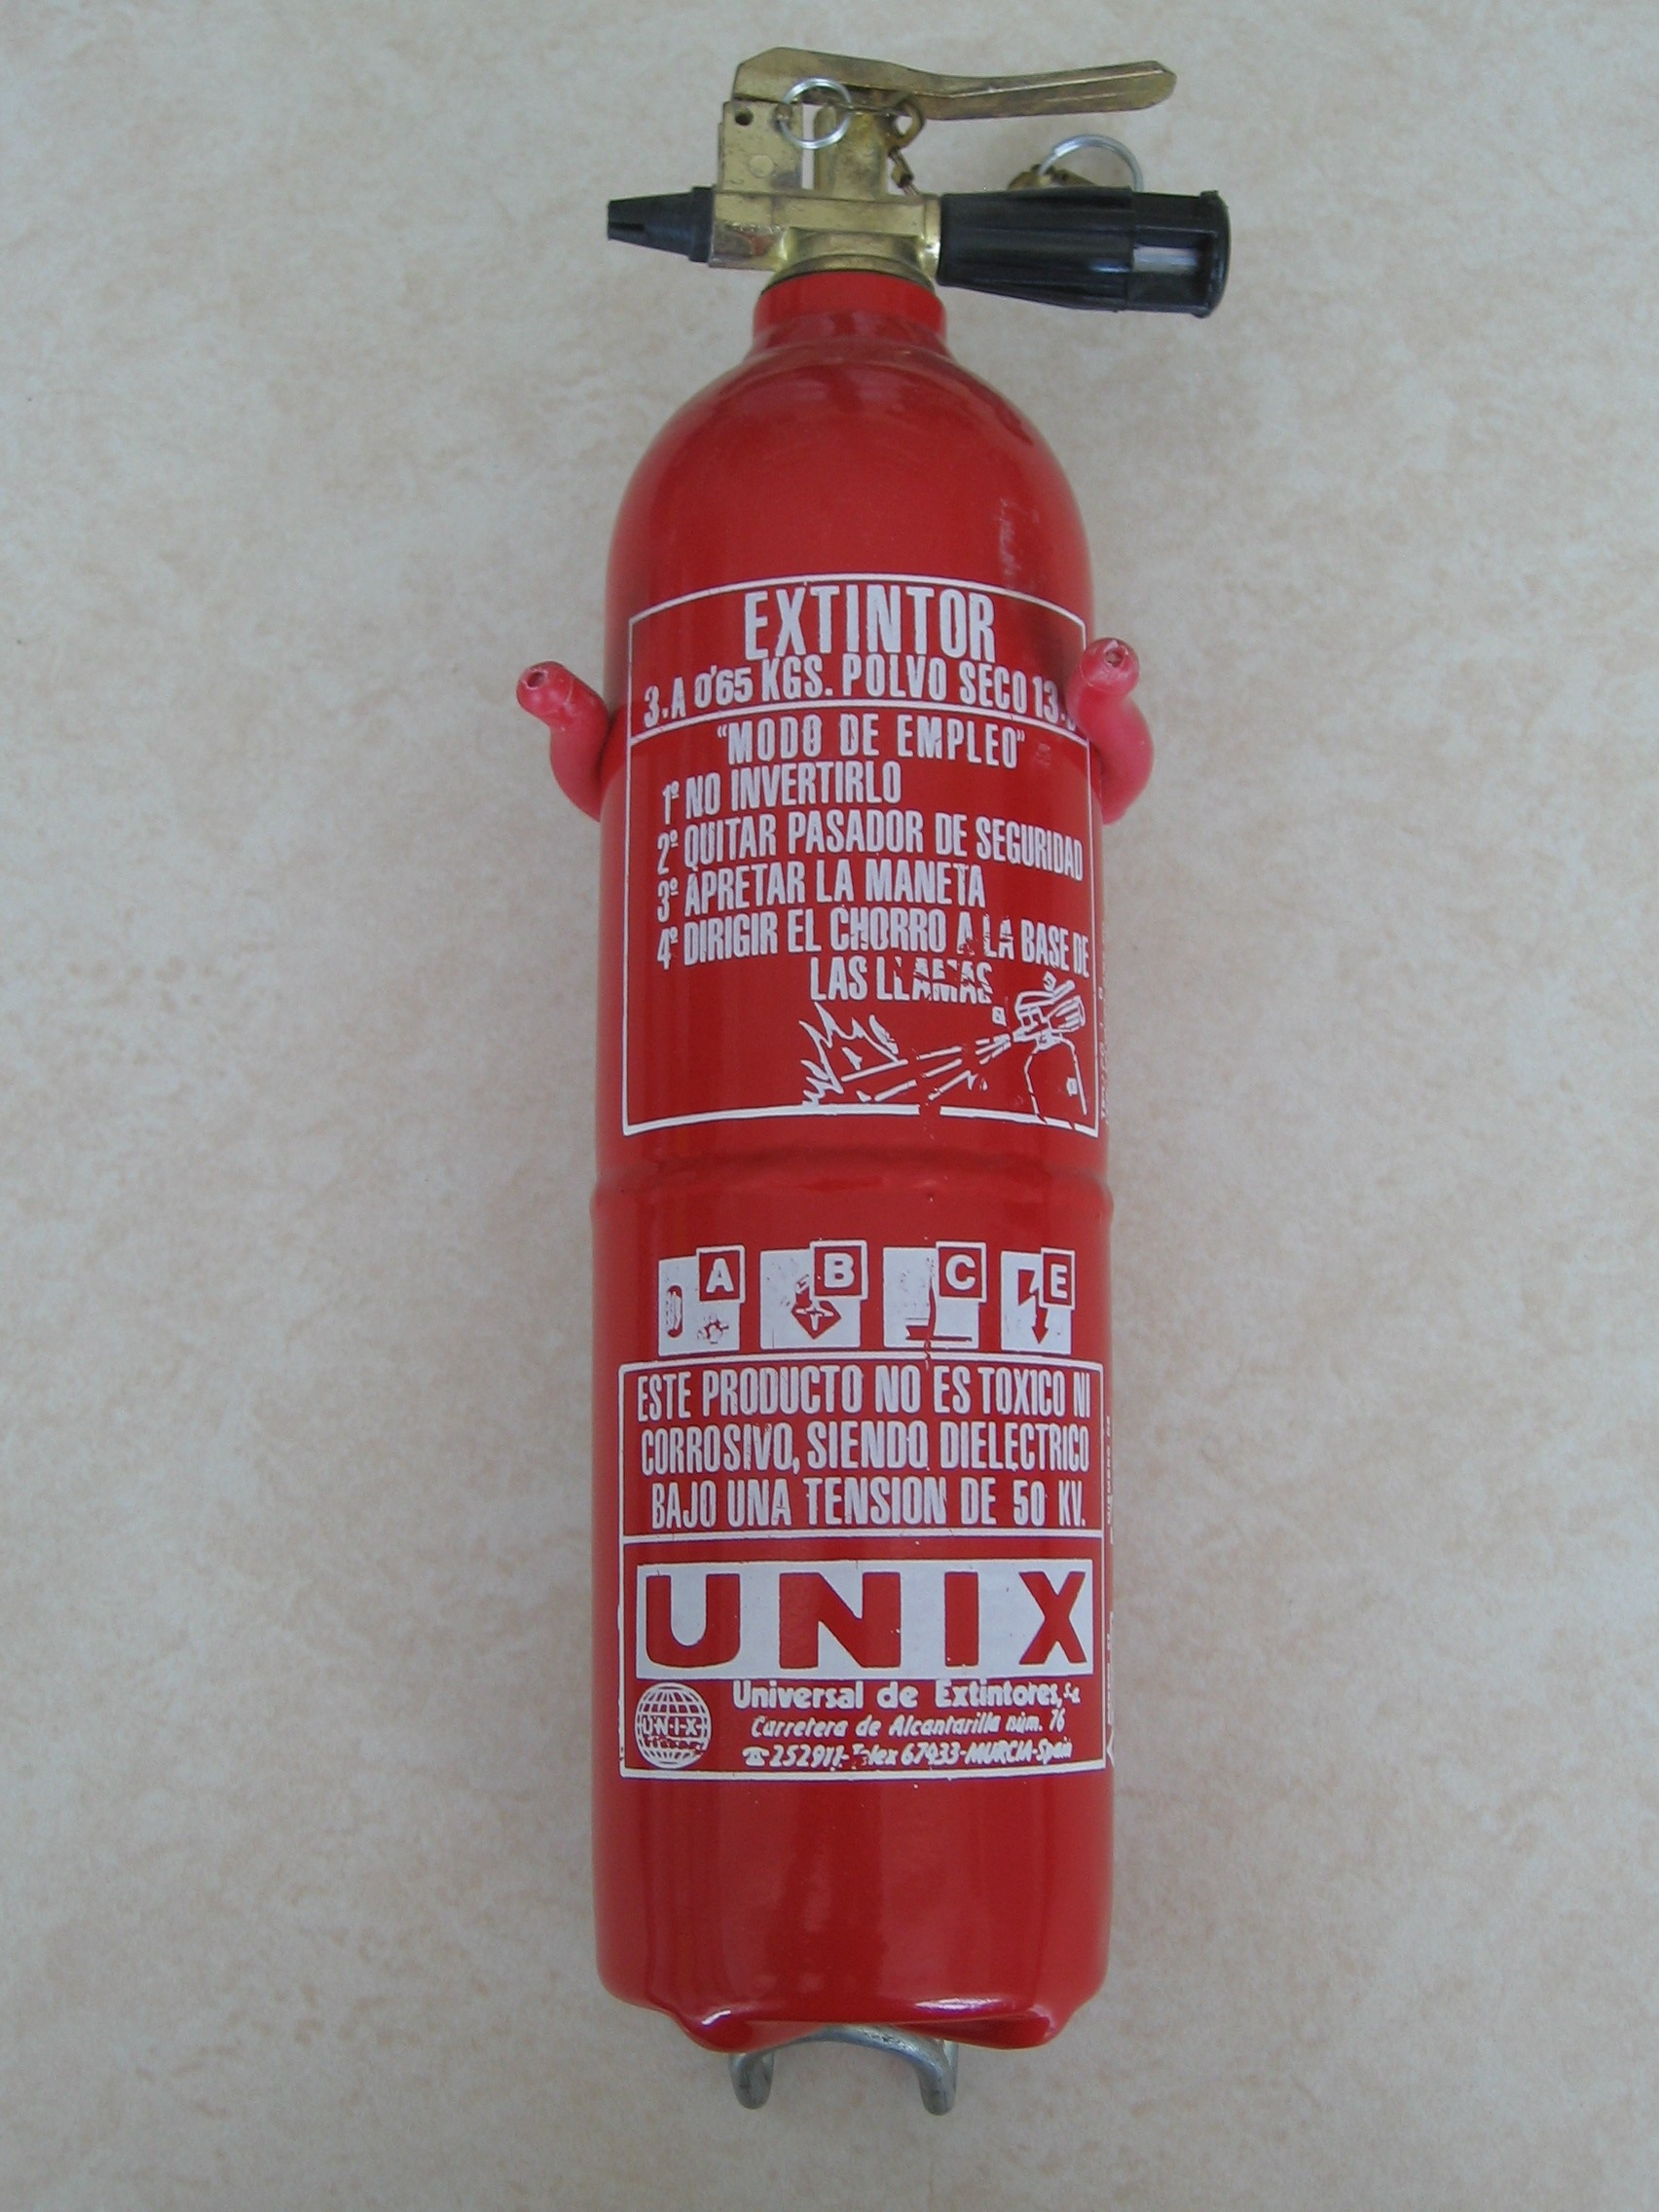 UNIX Fire Extinguisher